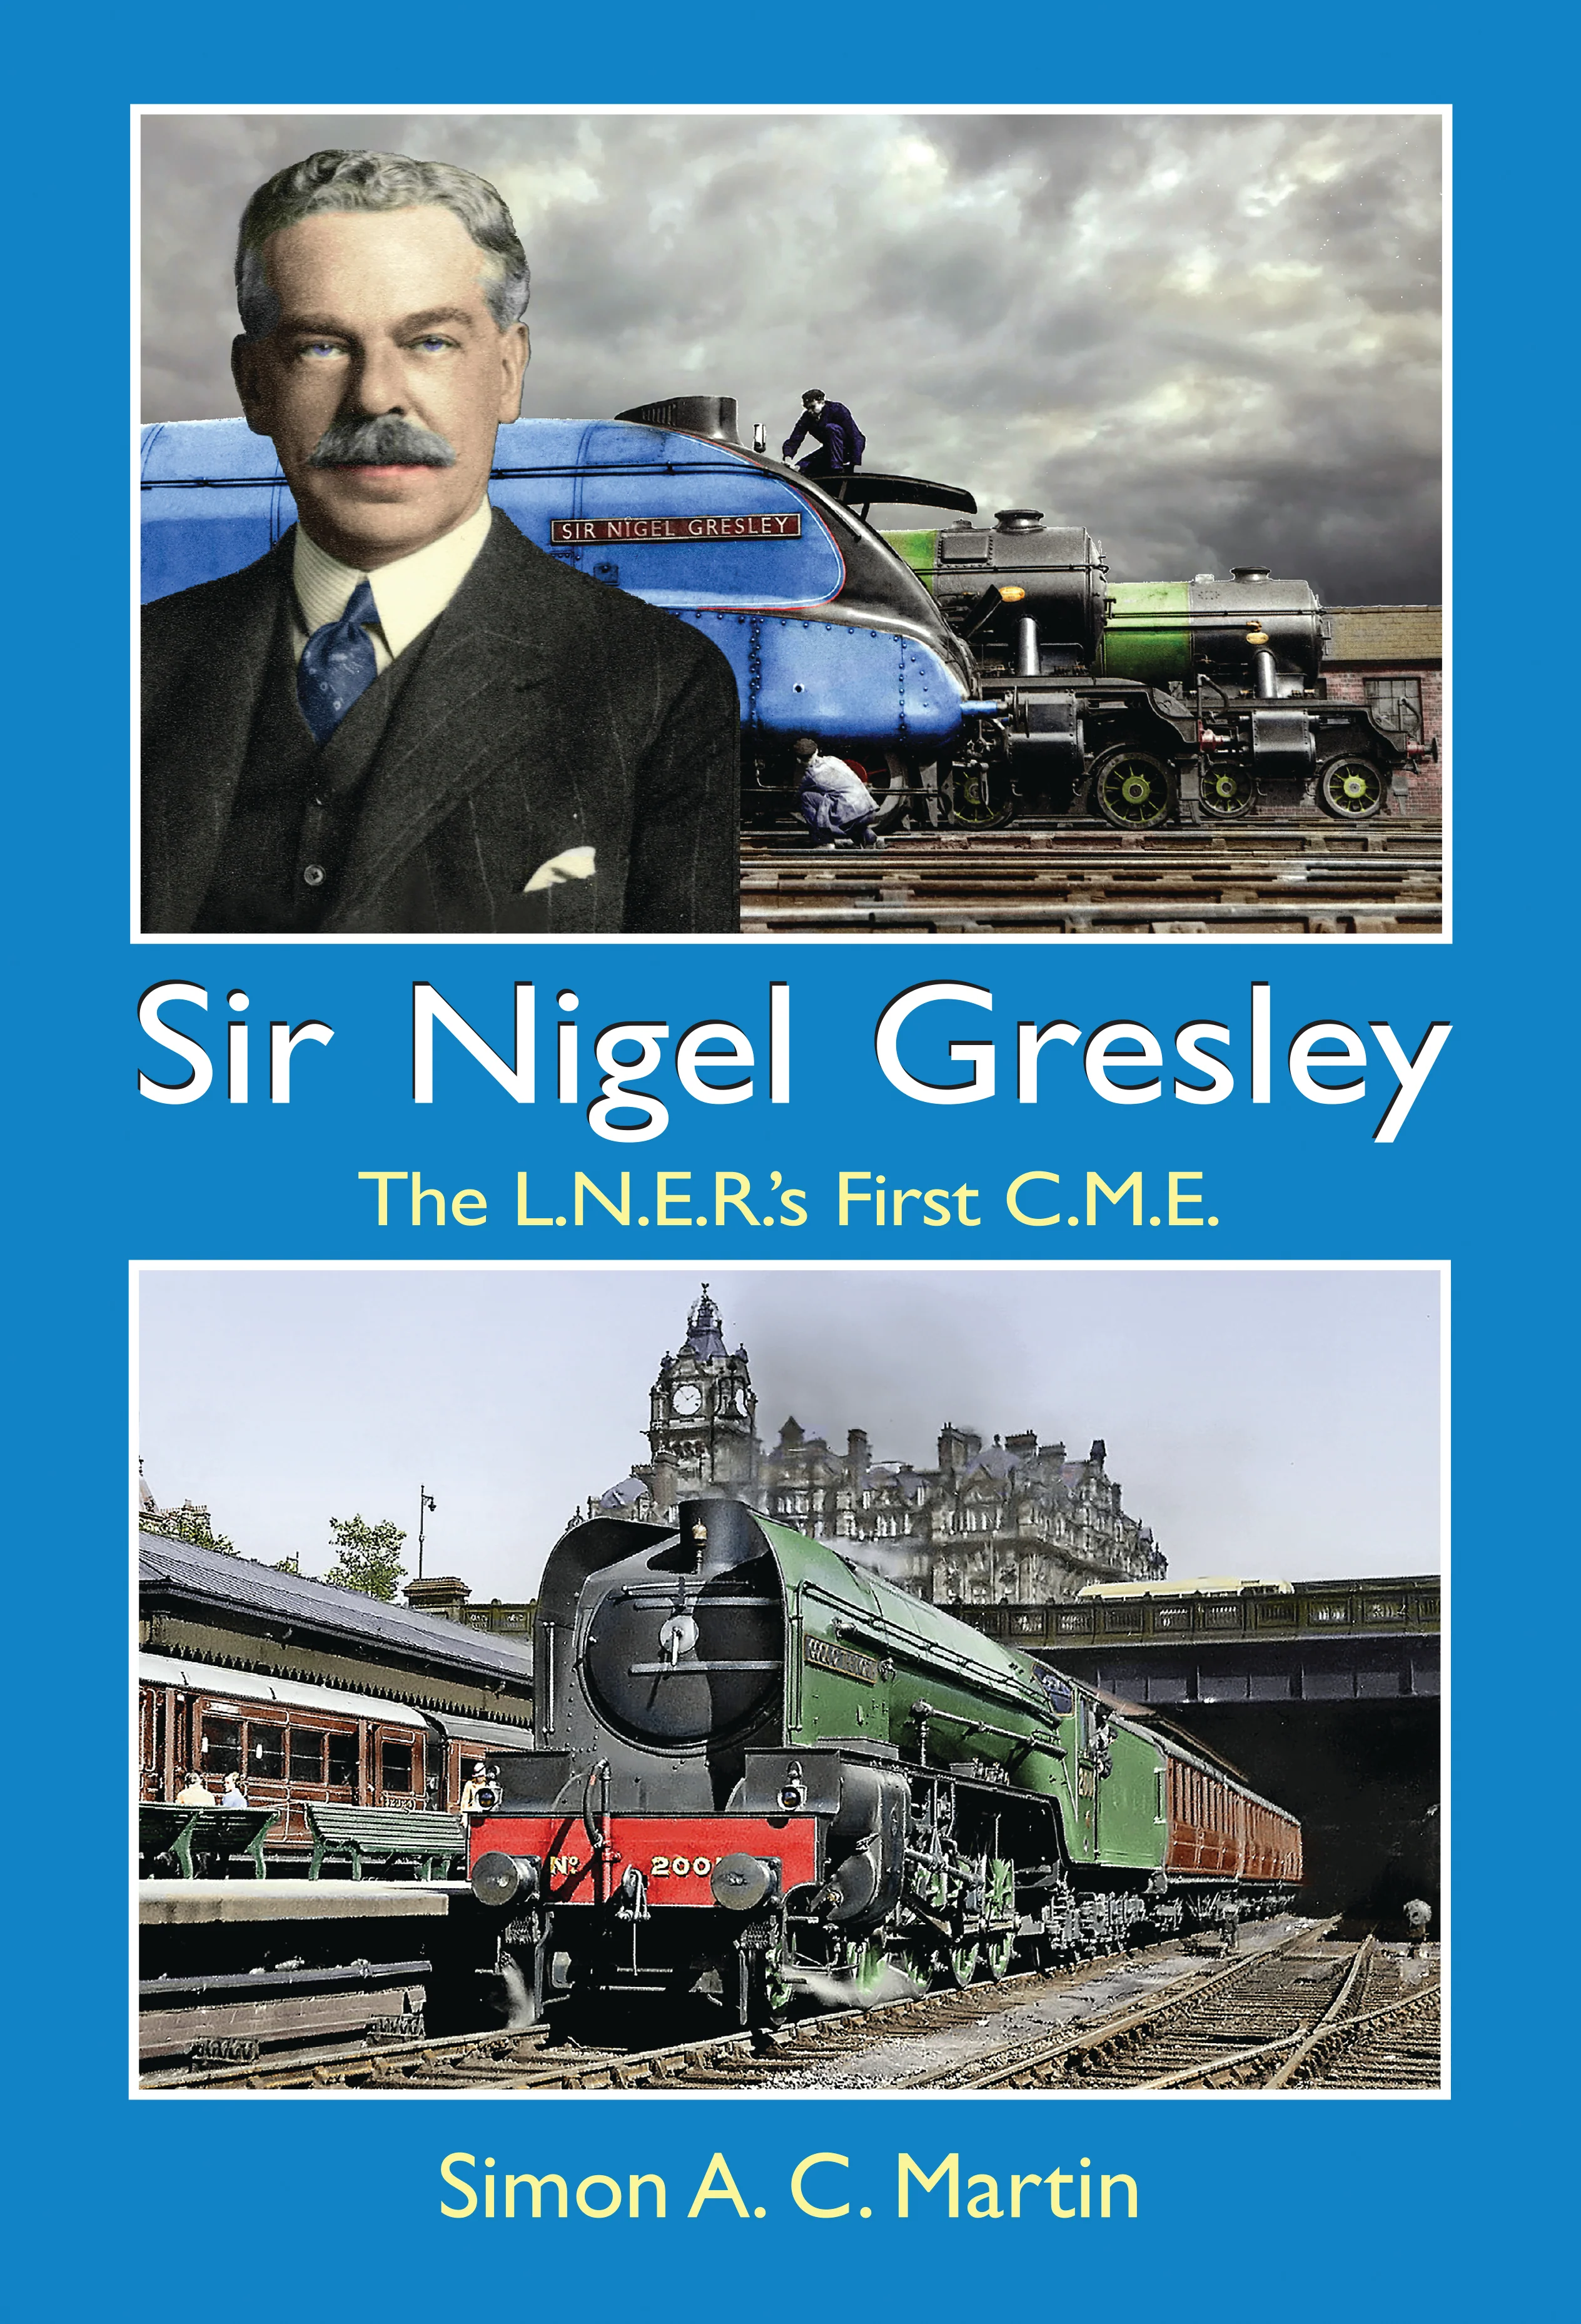 Sir Nigel Gresley The L.N.E.R.'s First C.M.E